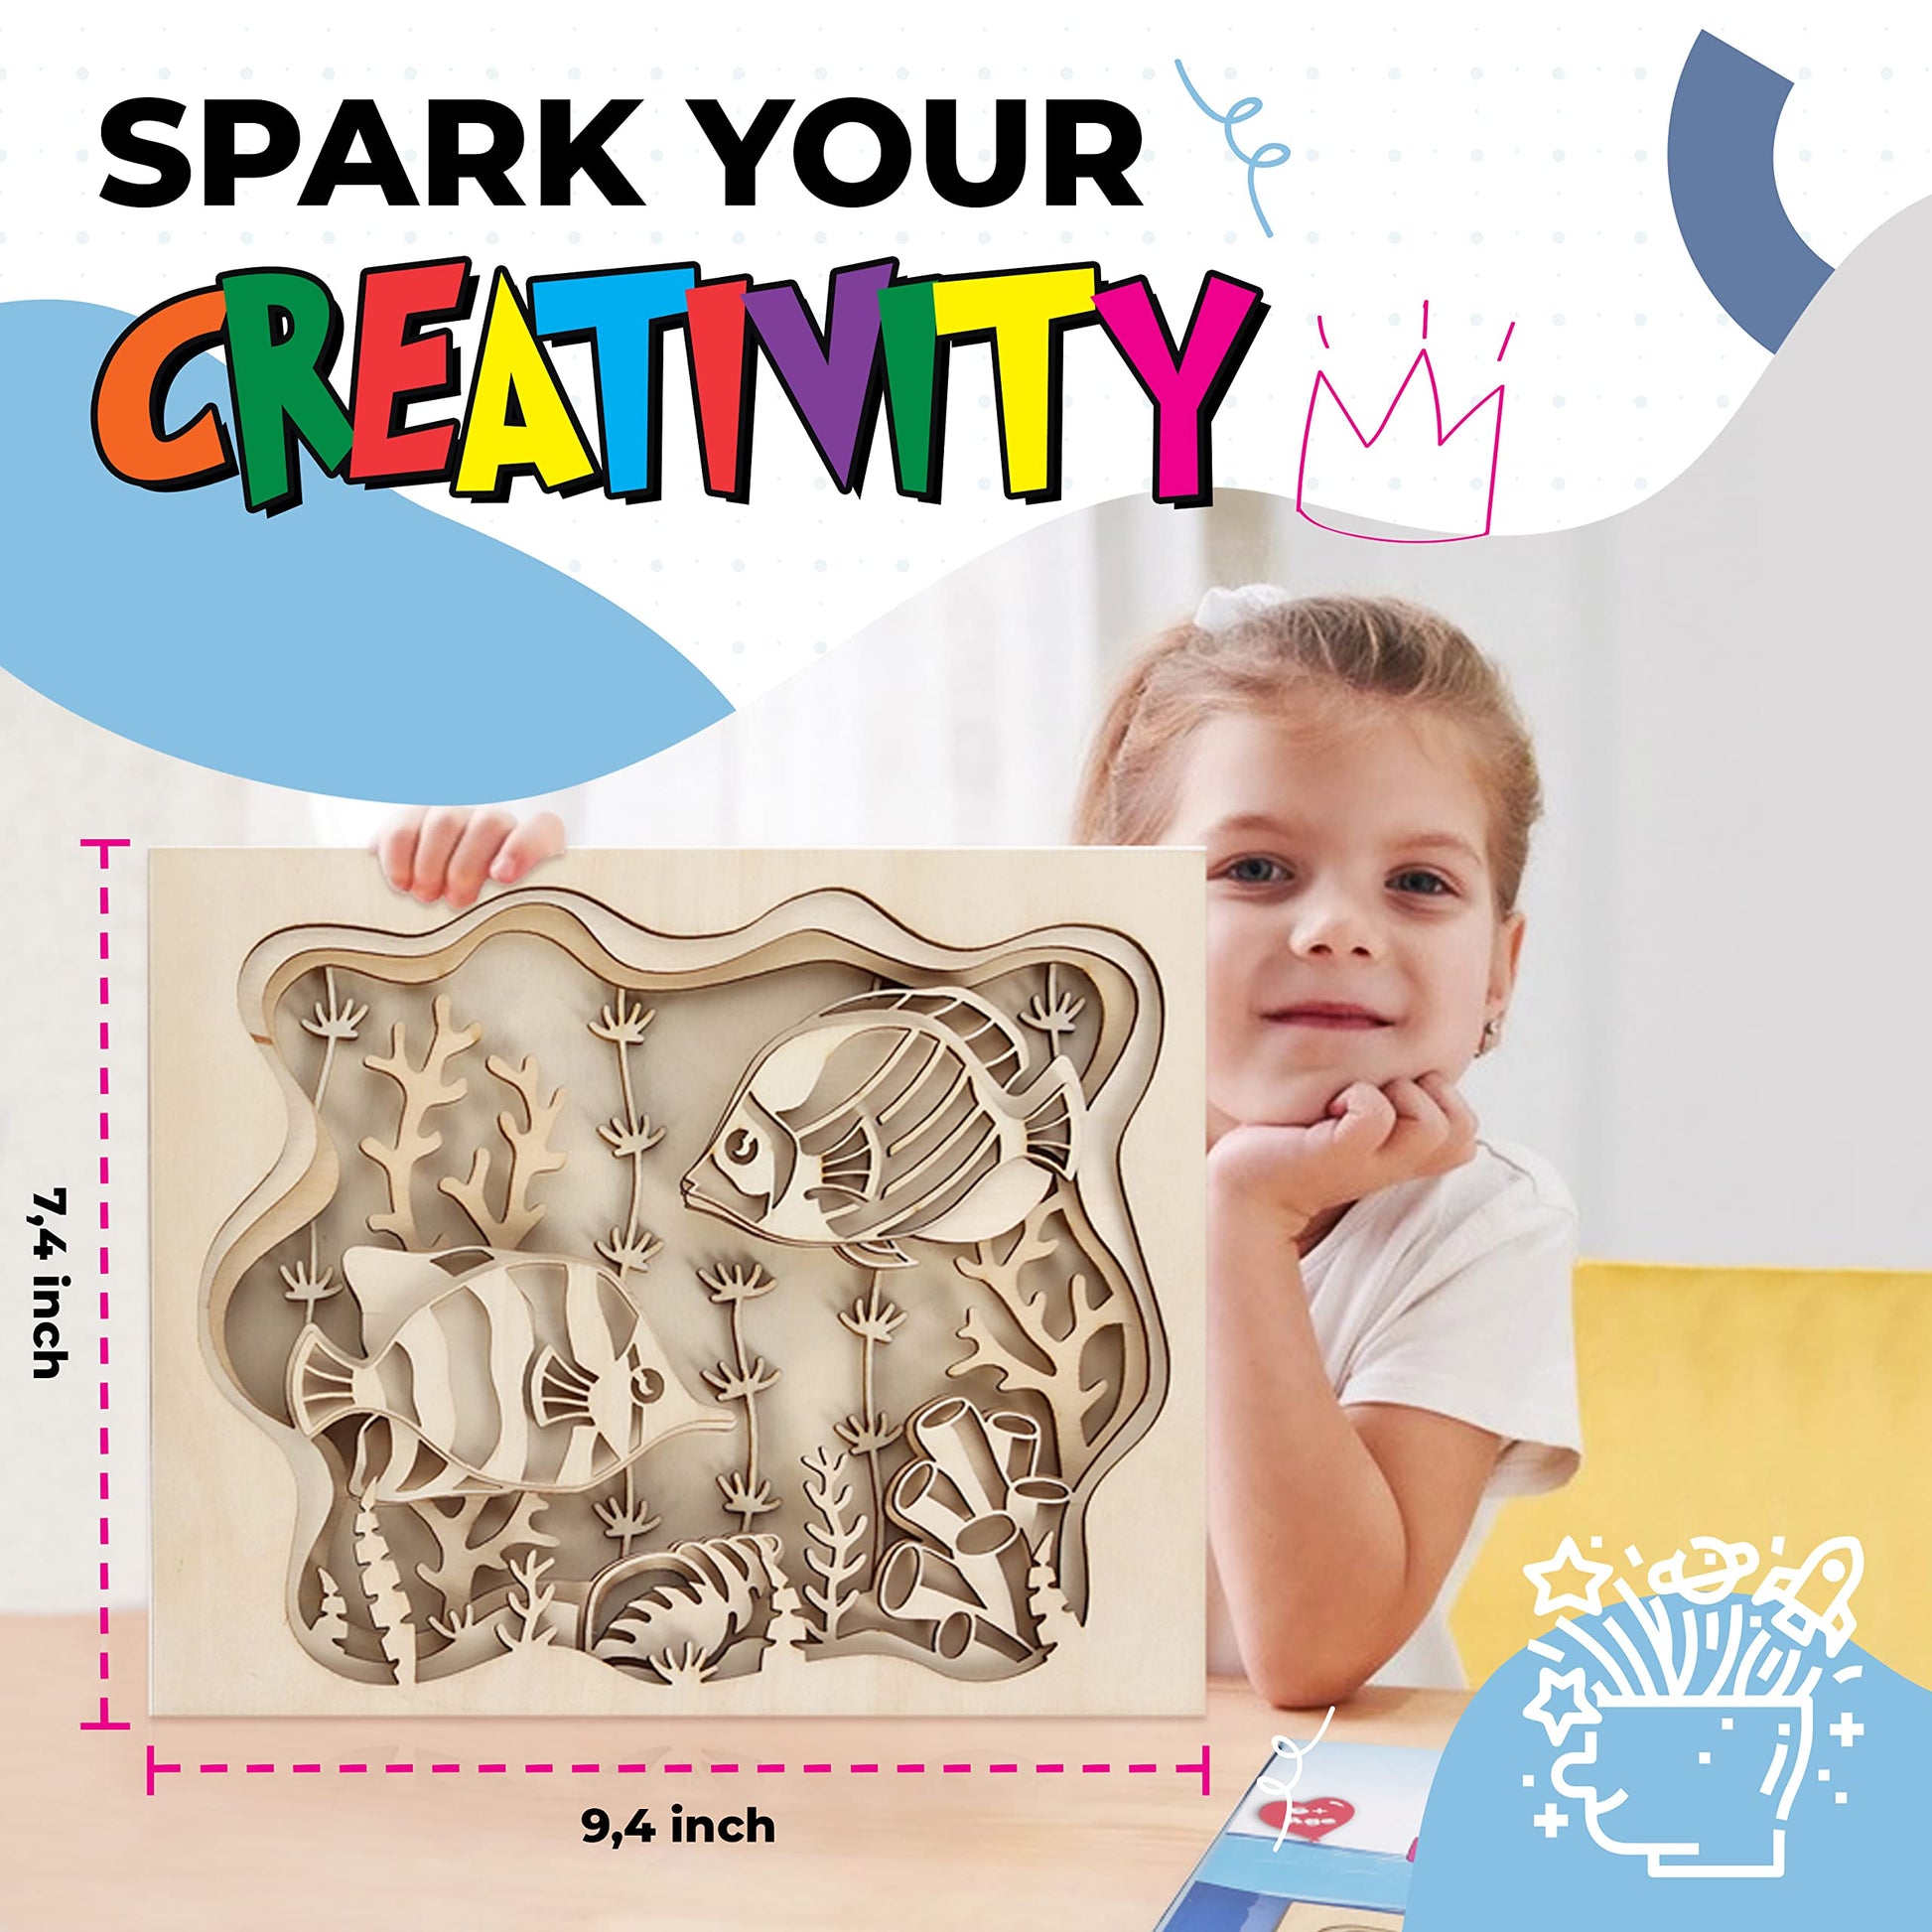  LEOGOR Paint Your Own Unicorn - Art Kit of Painting